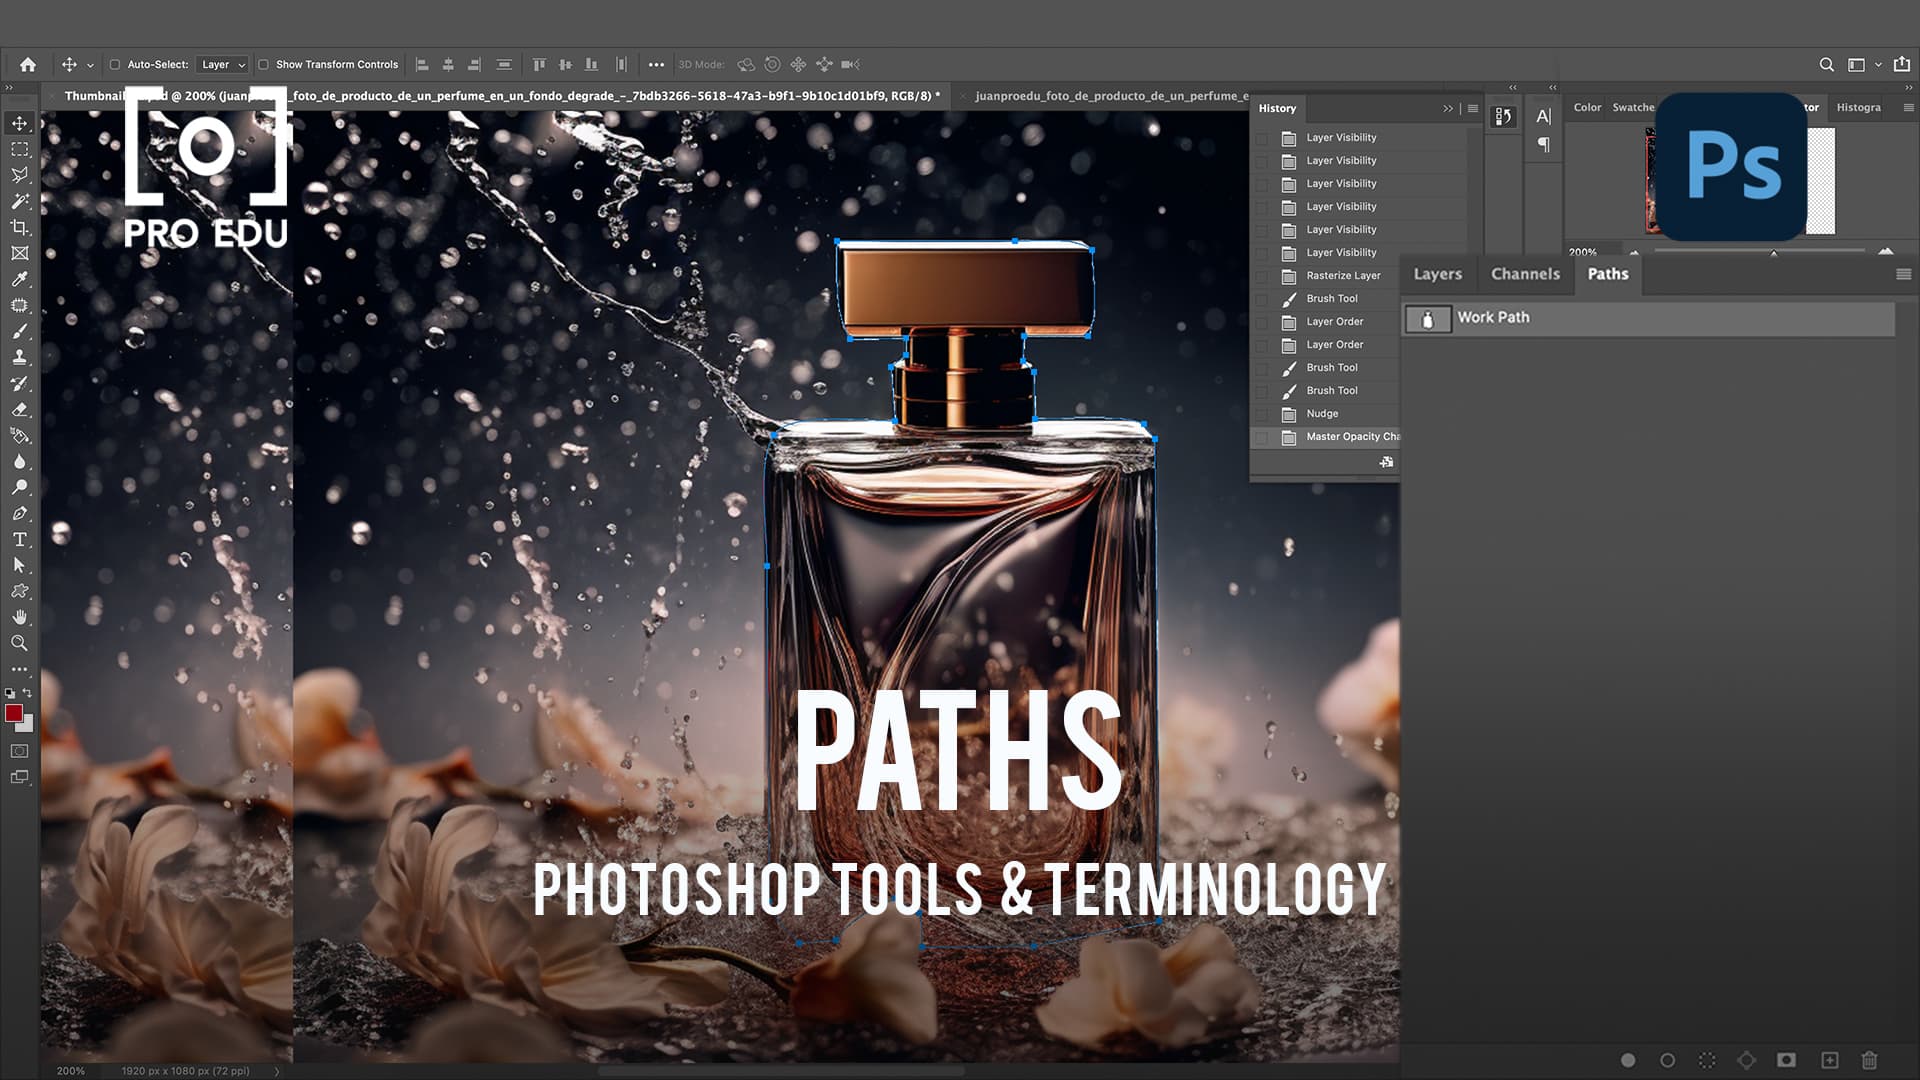 Paths Feature in Photoshop - PRO EDU Tutorial